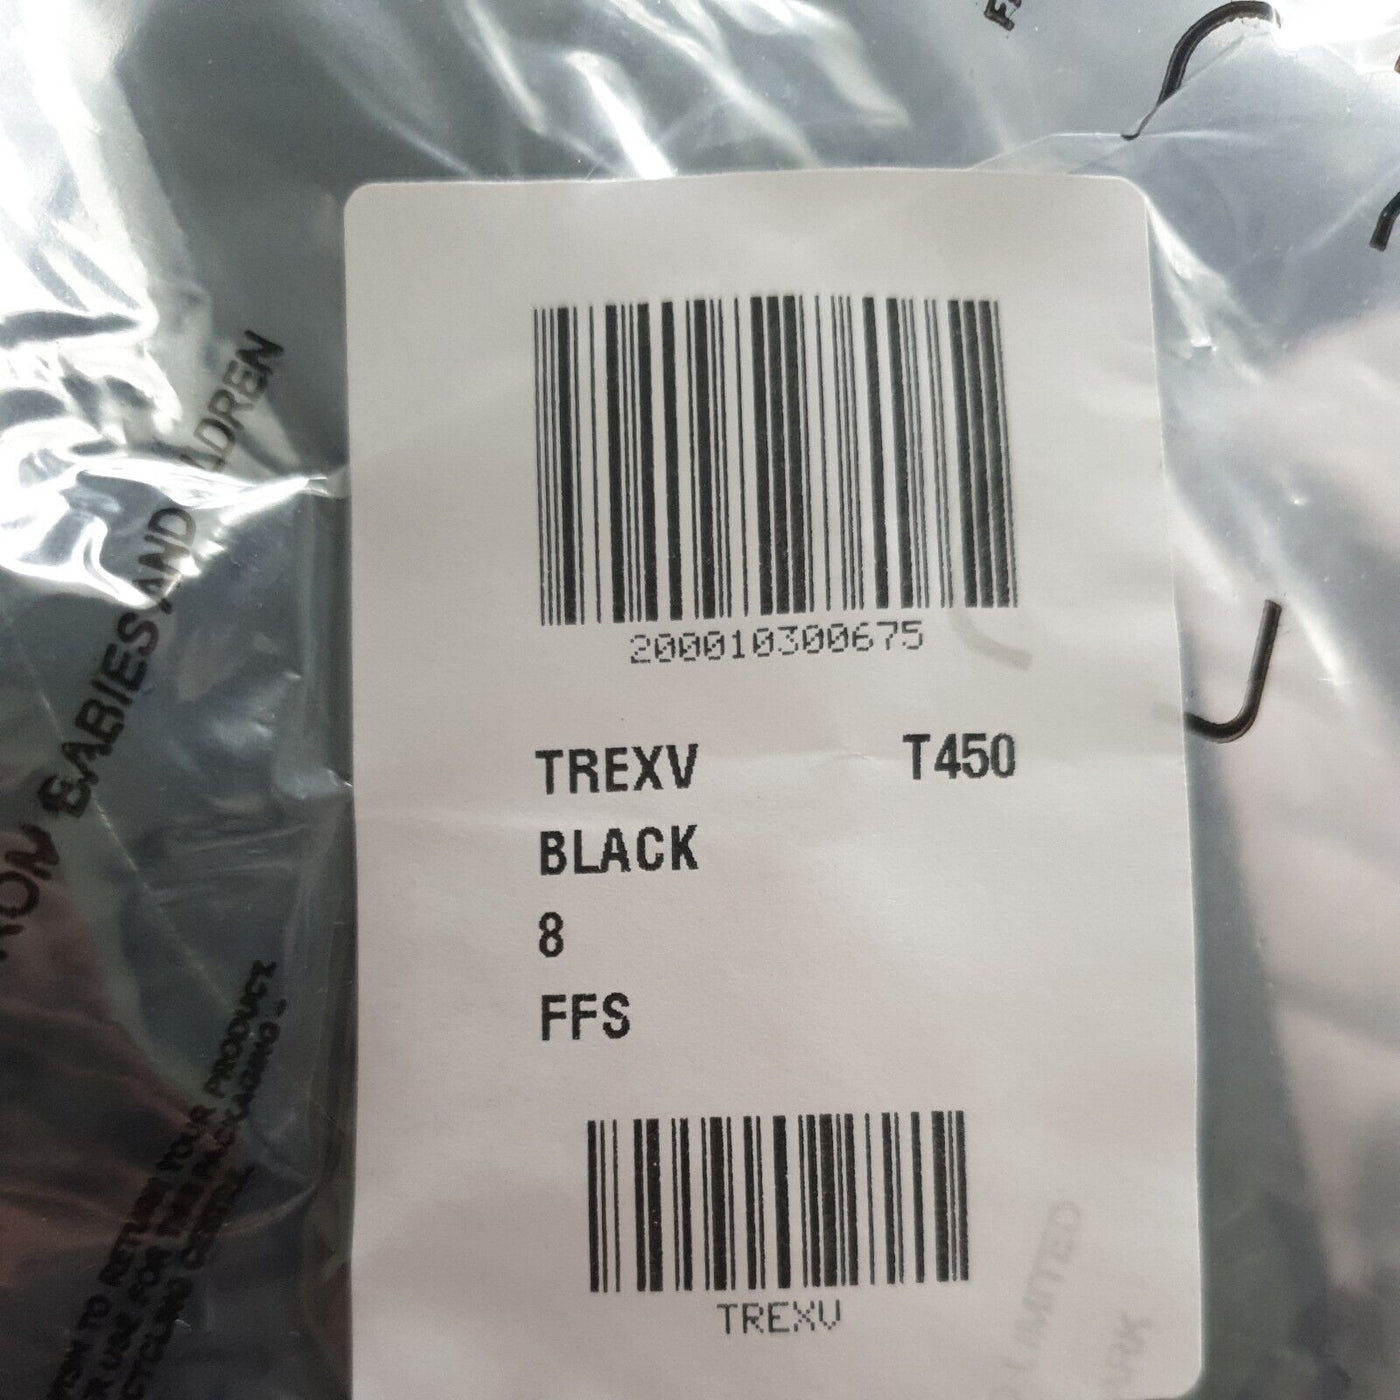 AX Paris Black Printed Frill Hem Midi Dress Uk8 ****Ref V236